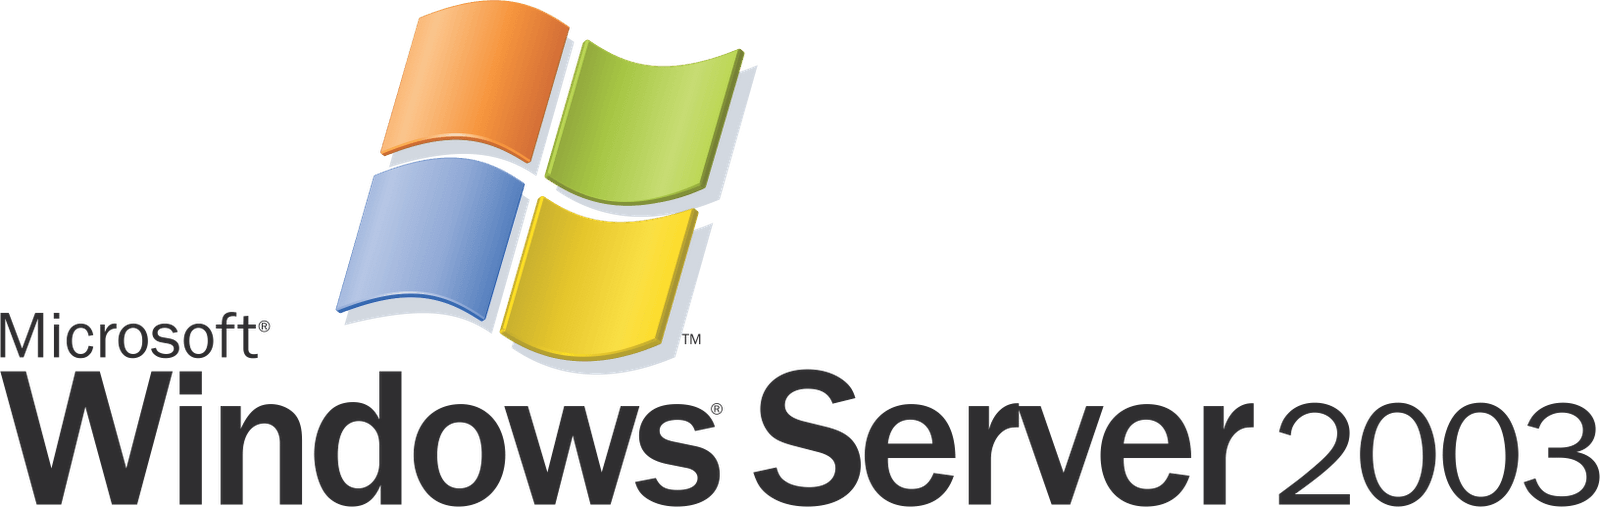 Windows Server 2003 Us Logo - Windows Server 2003 support is ending July 14 AD Network Solutions